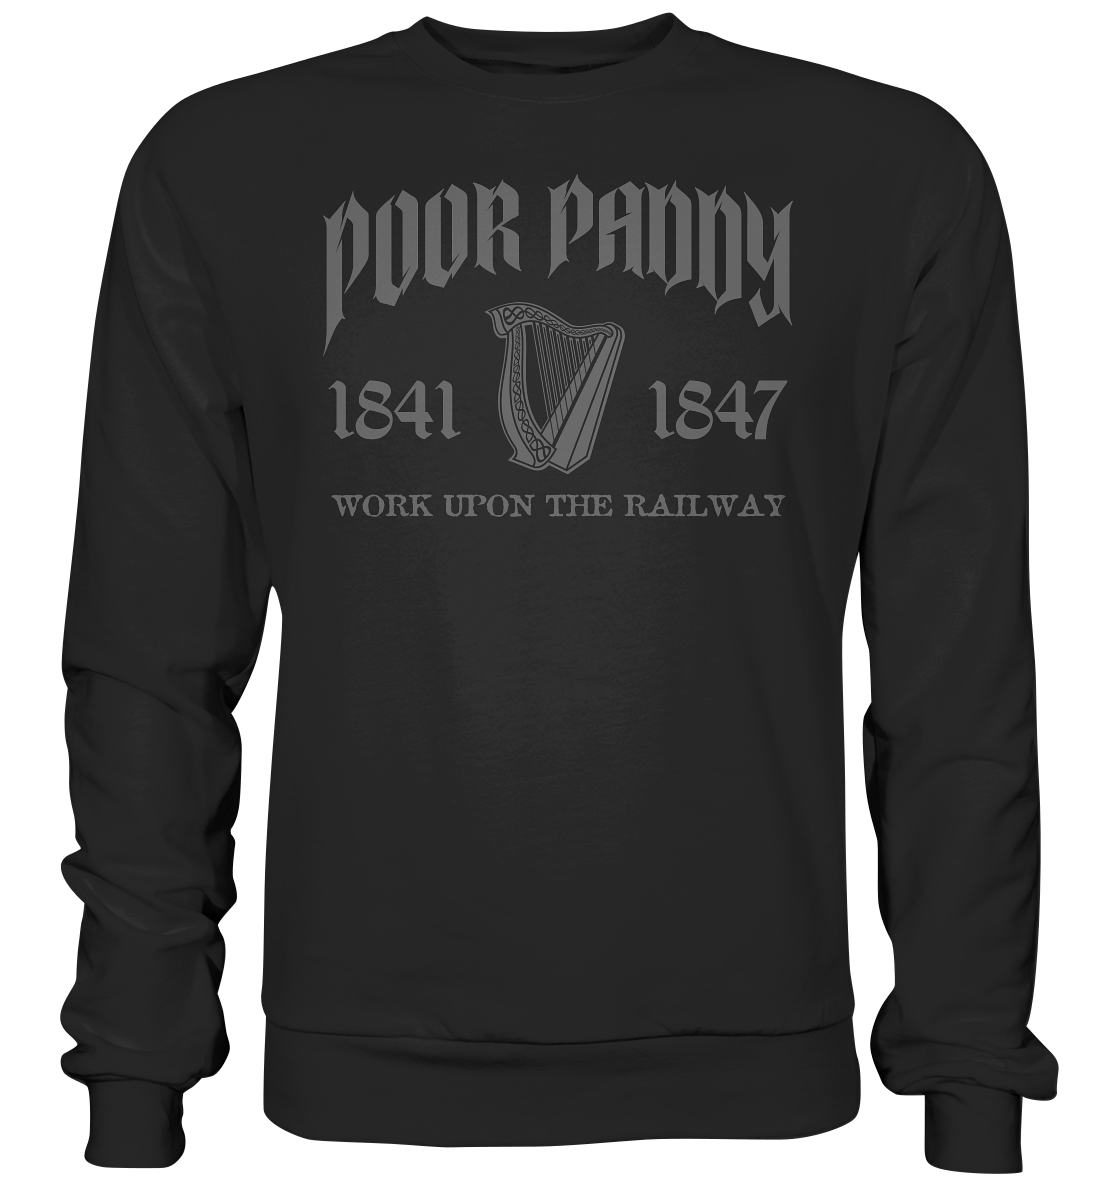 Poor Paddy "Work Upon The Railway" - Premium Sweatshirt